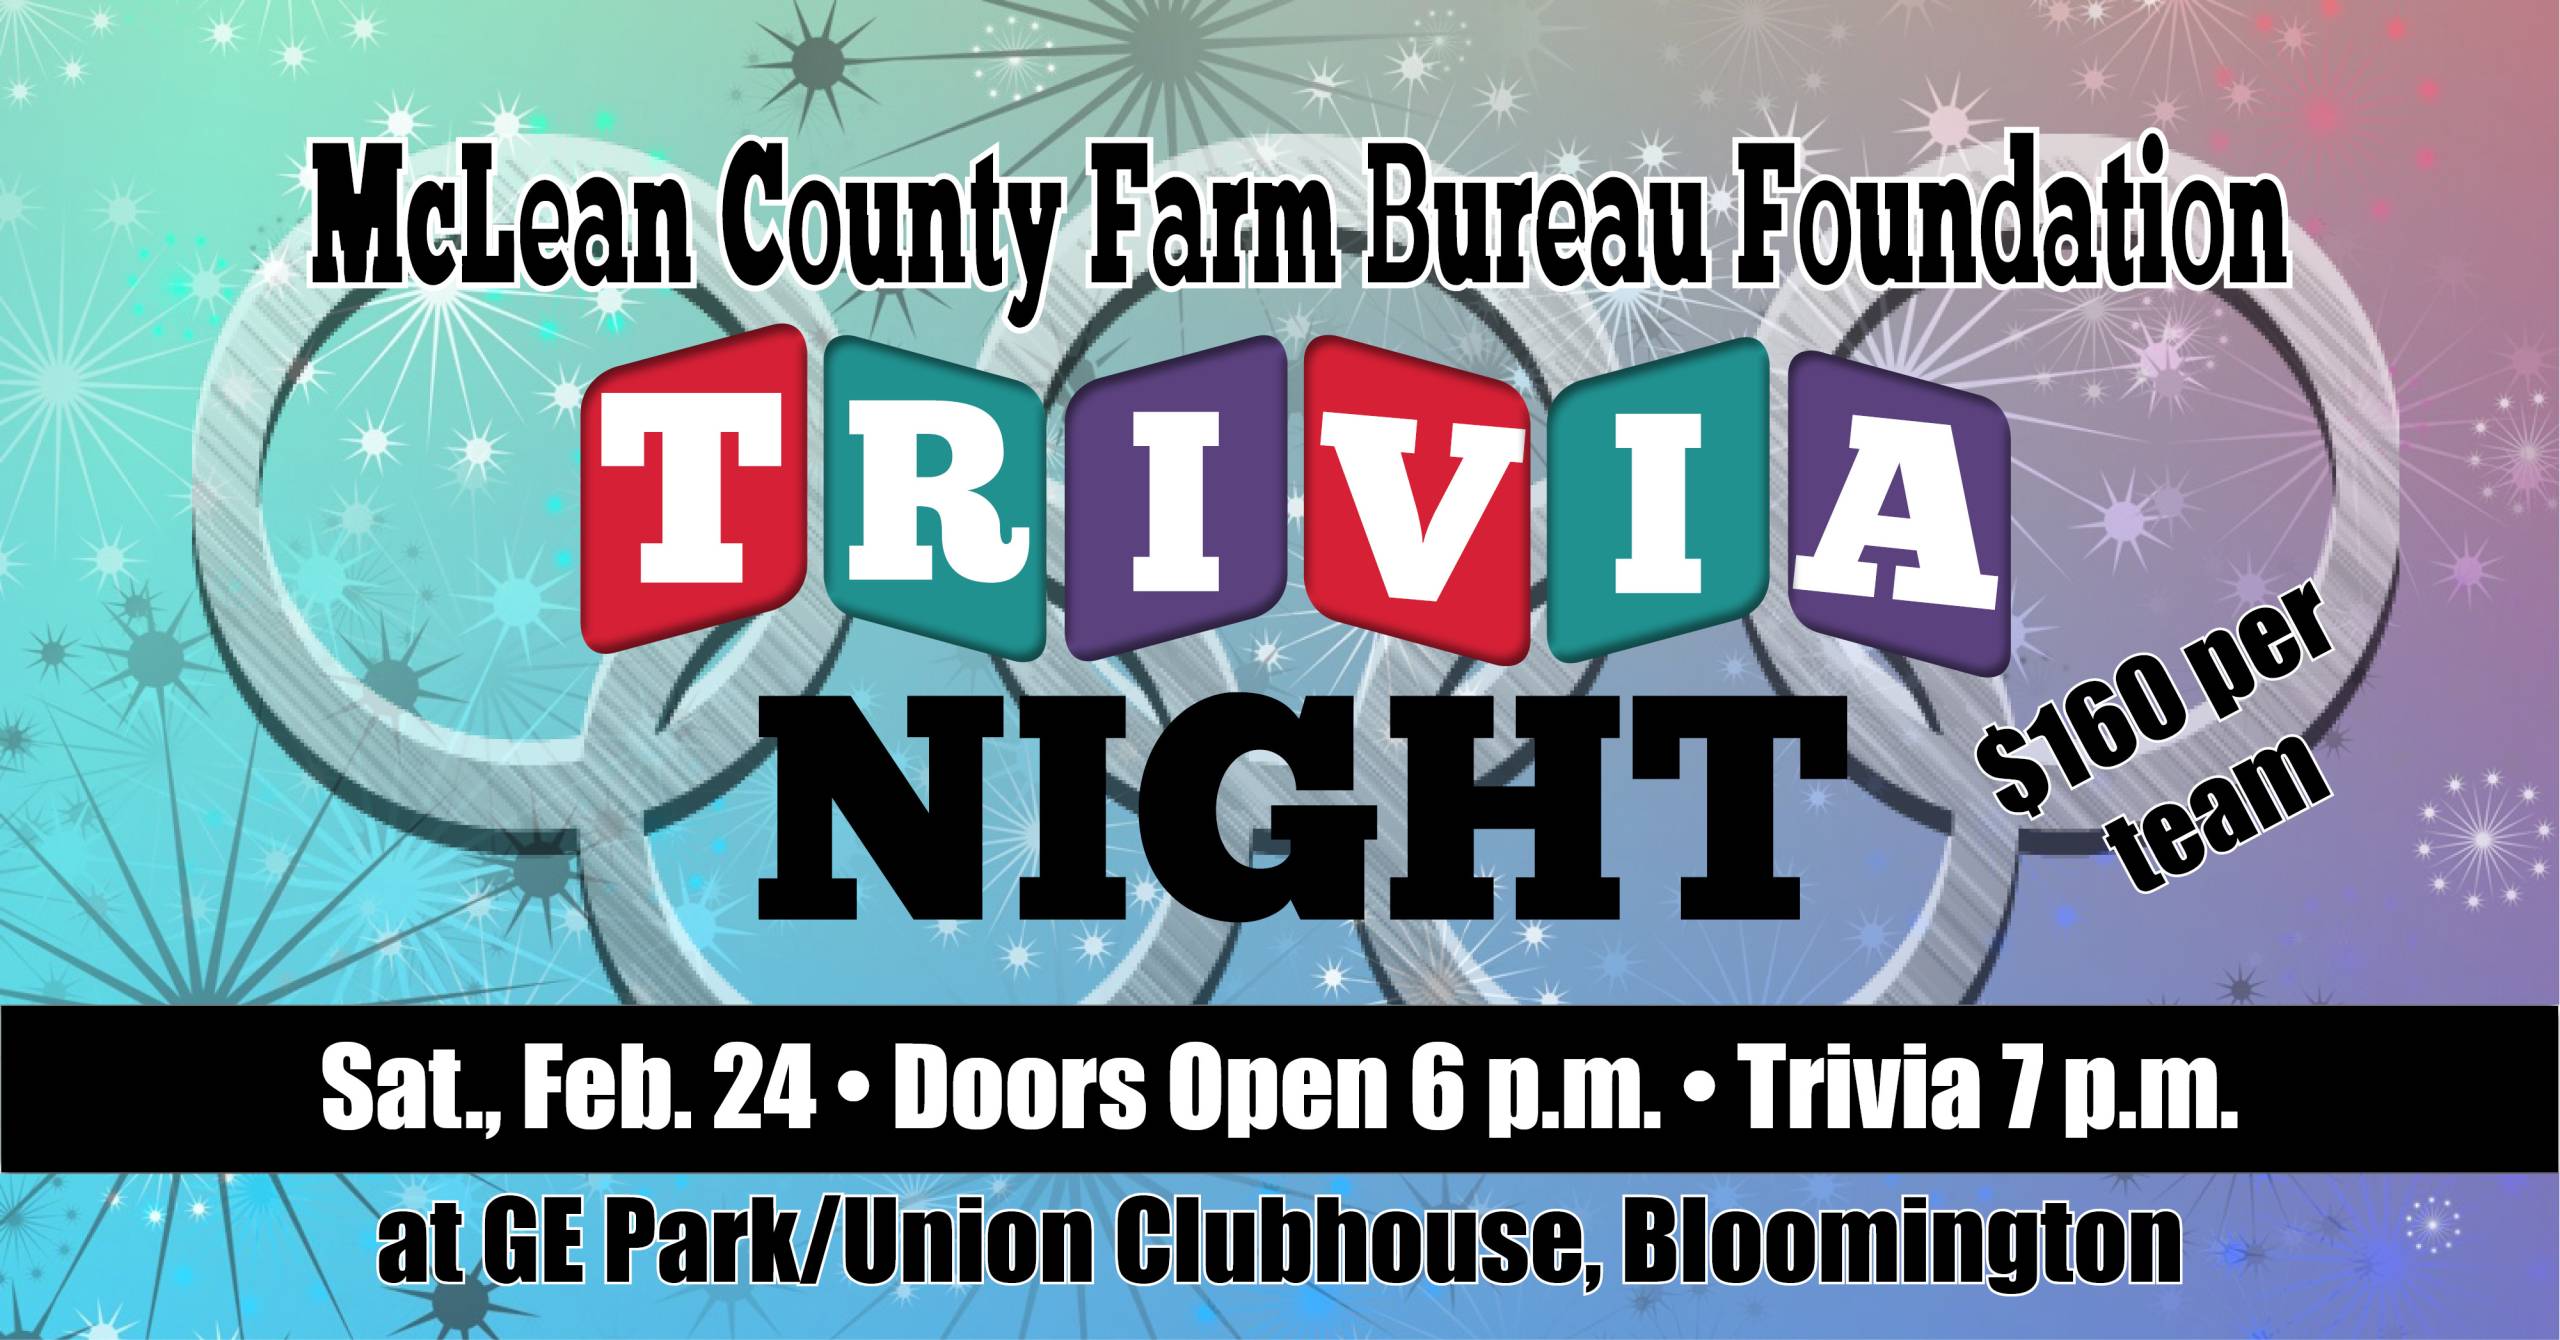 McLean County Farm Bureau Foundation Trivia Night